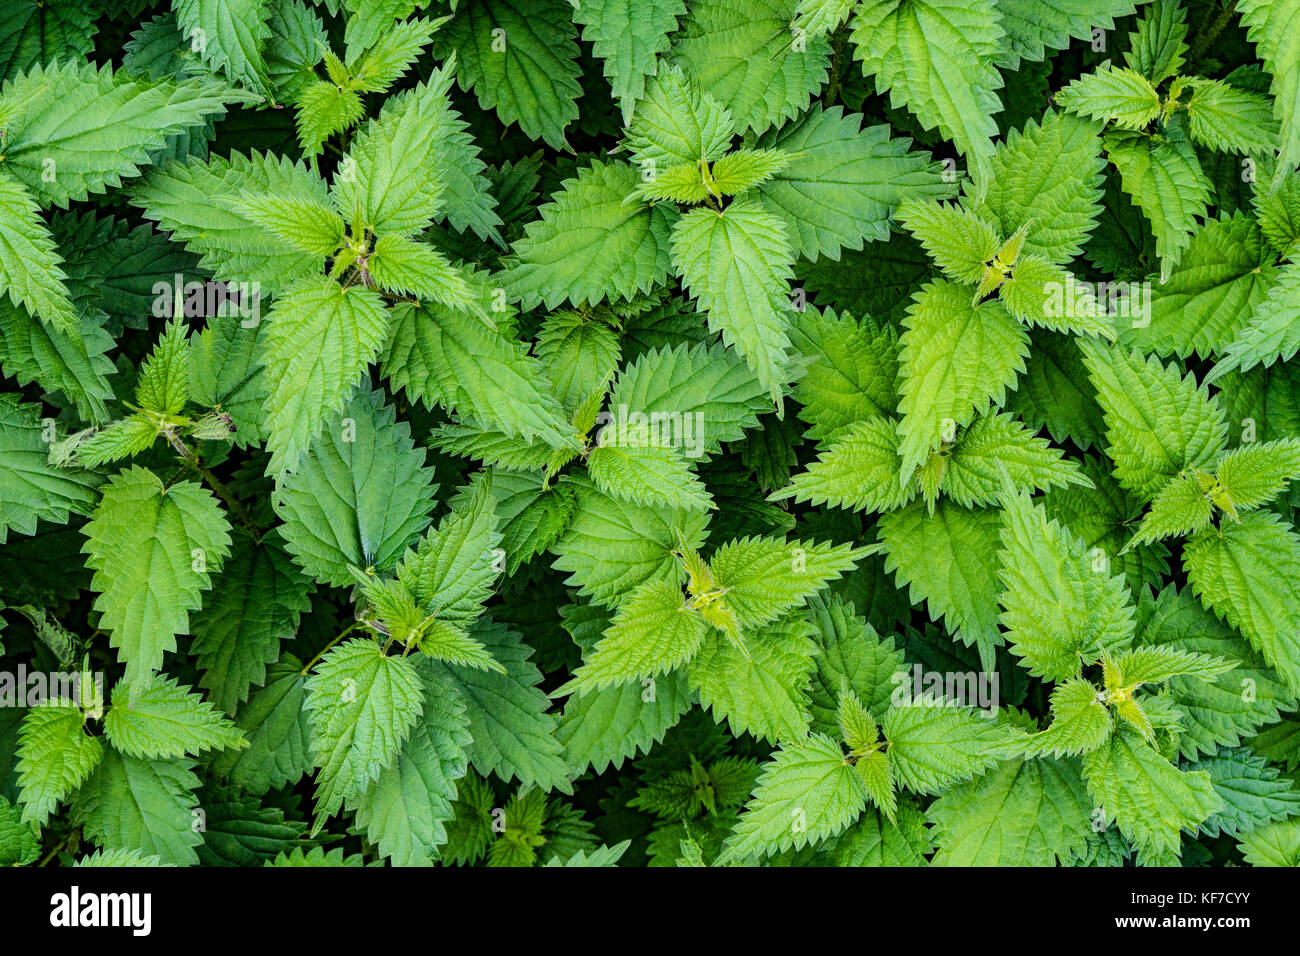 Backdrop of green nettle leaves Stock Photo